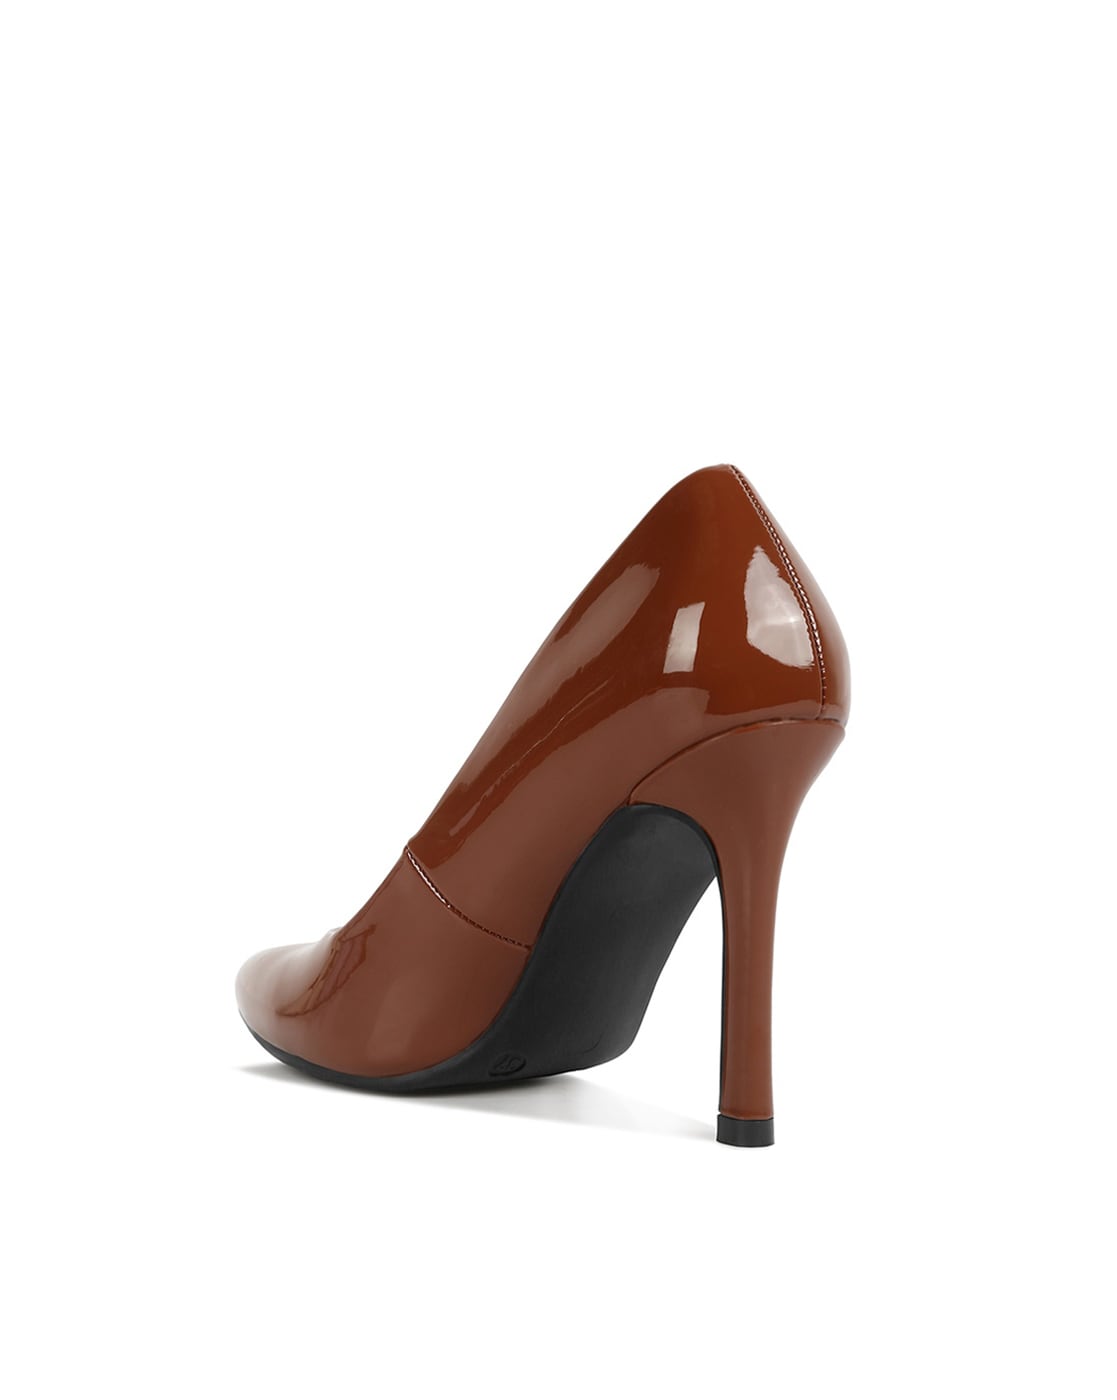 Women's Pointy Slingback High Heel Pumps | Buy high heel shoes